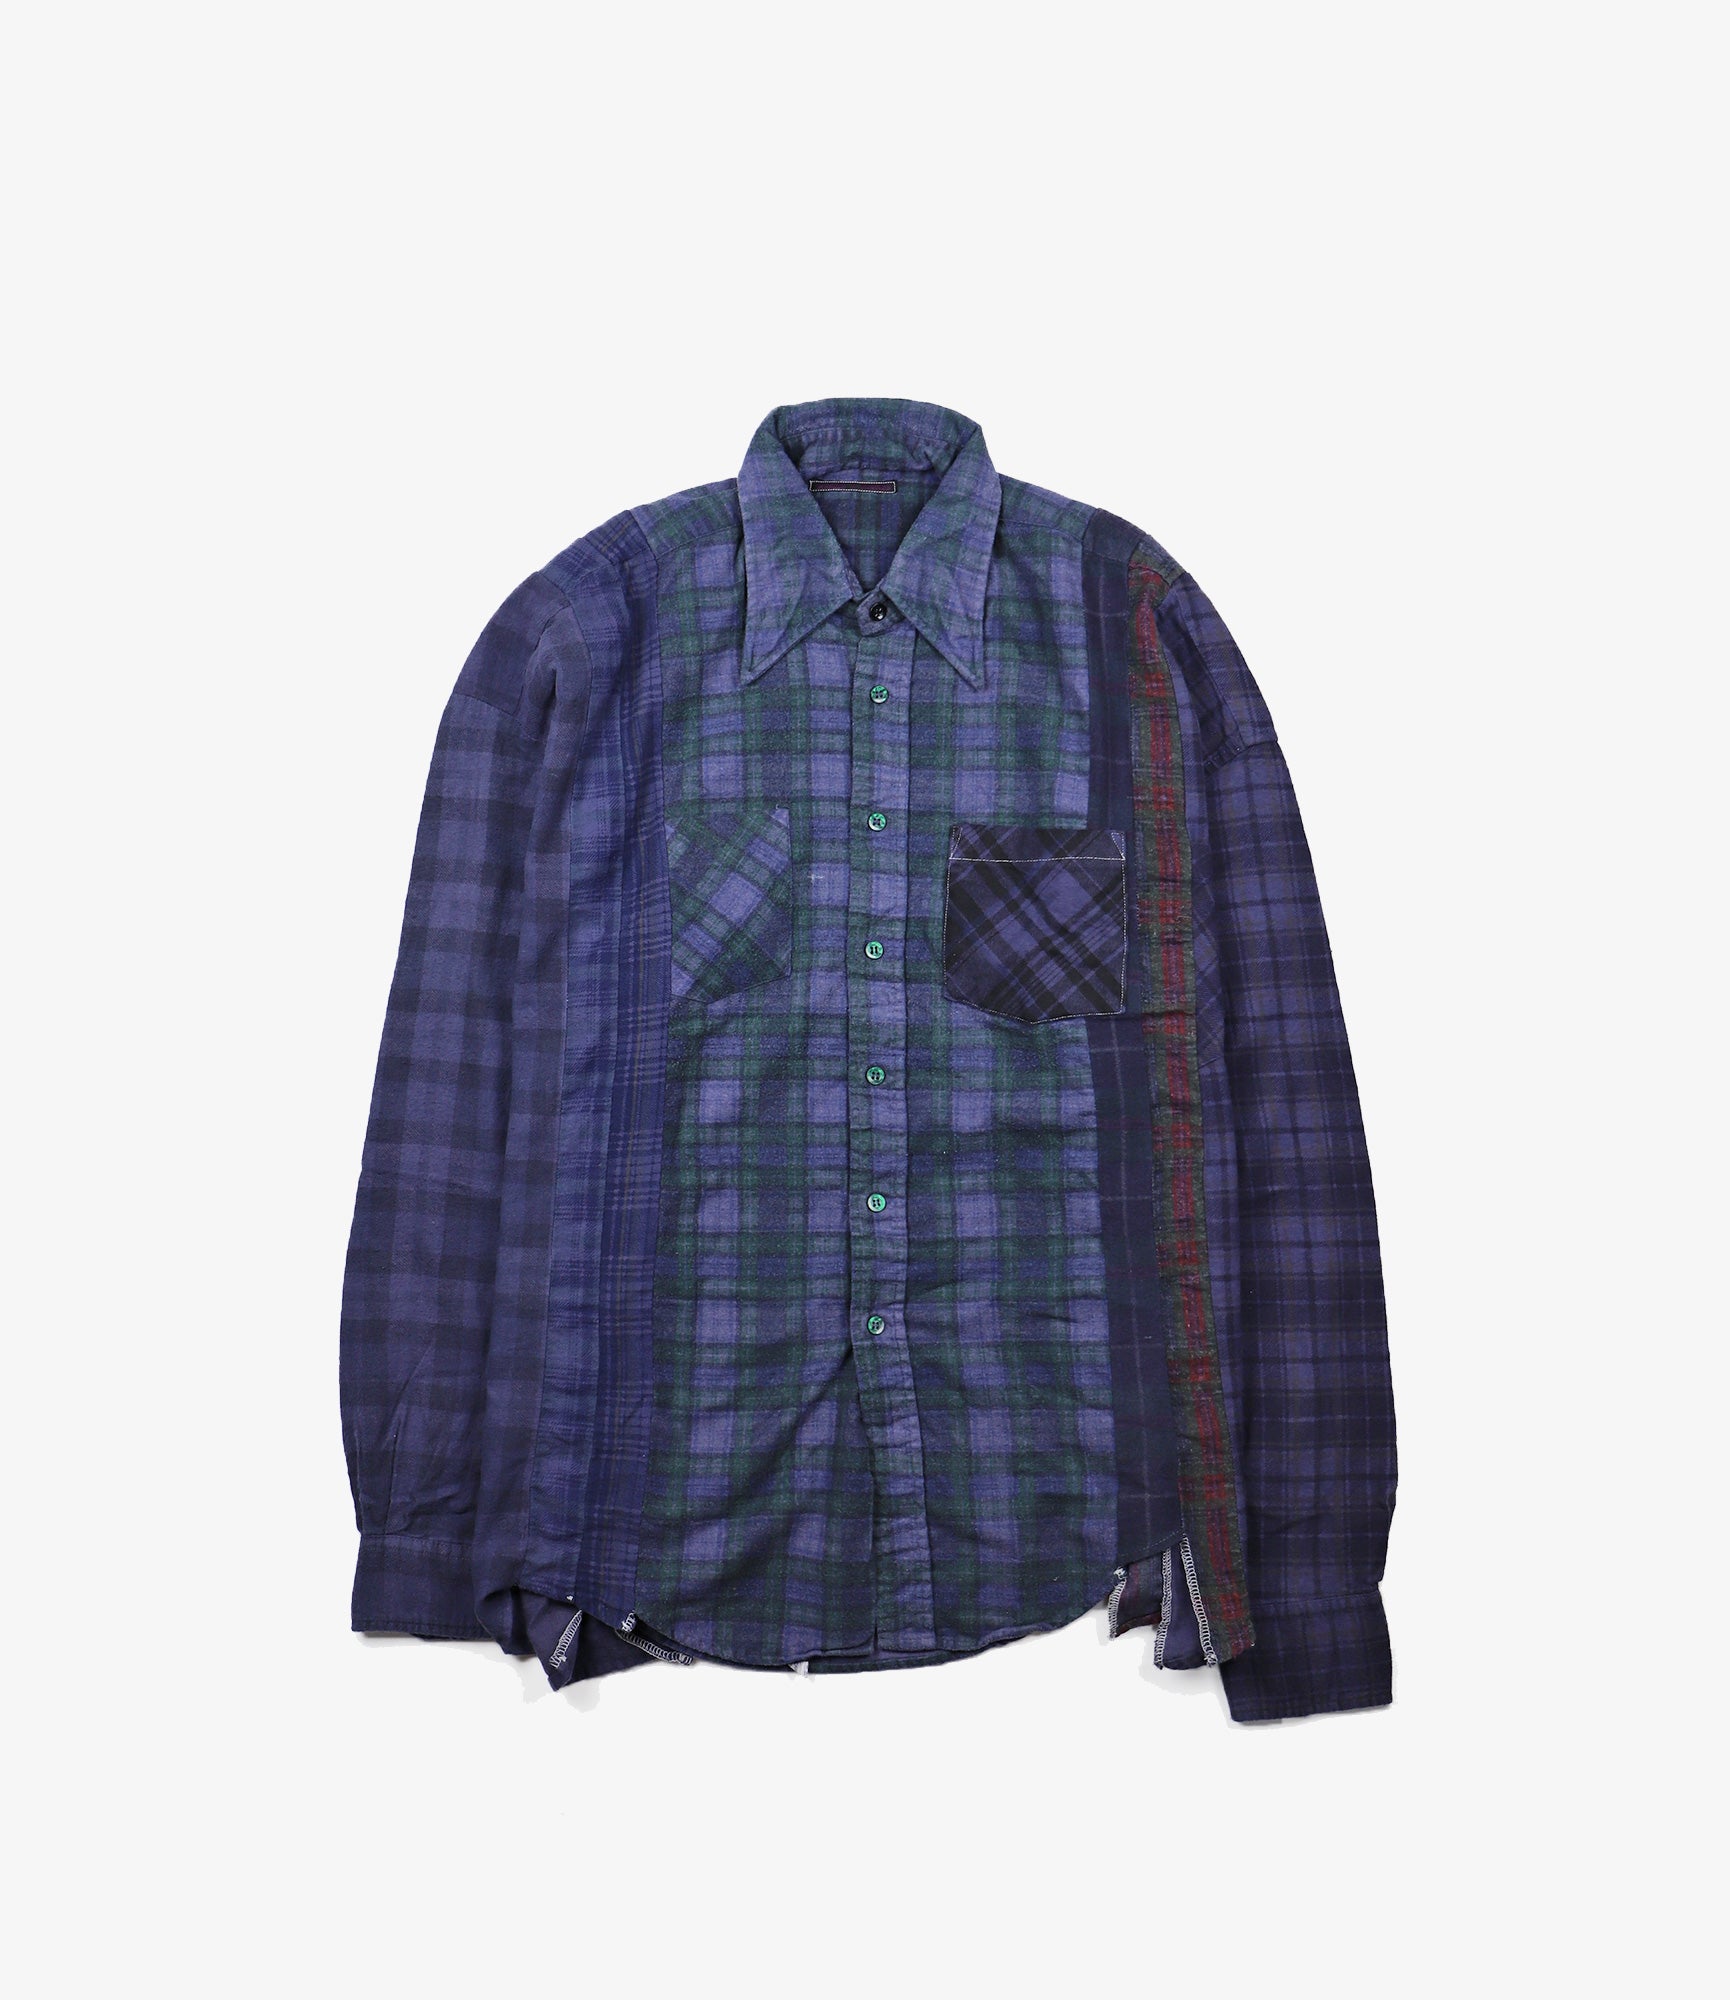 Rebuild by Needles Flannel Shirt - 7 Cuts Wide / Over Dye - Purple